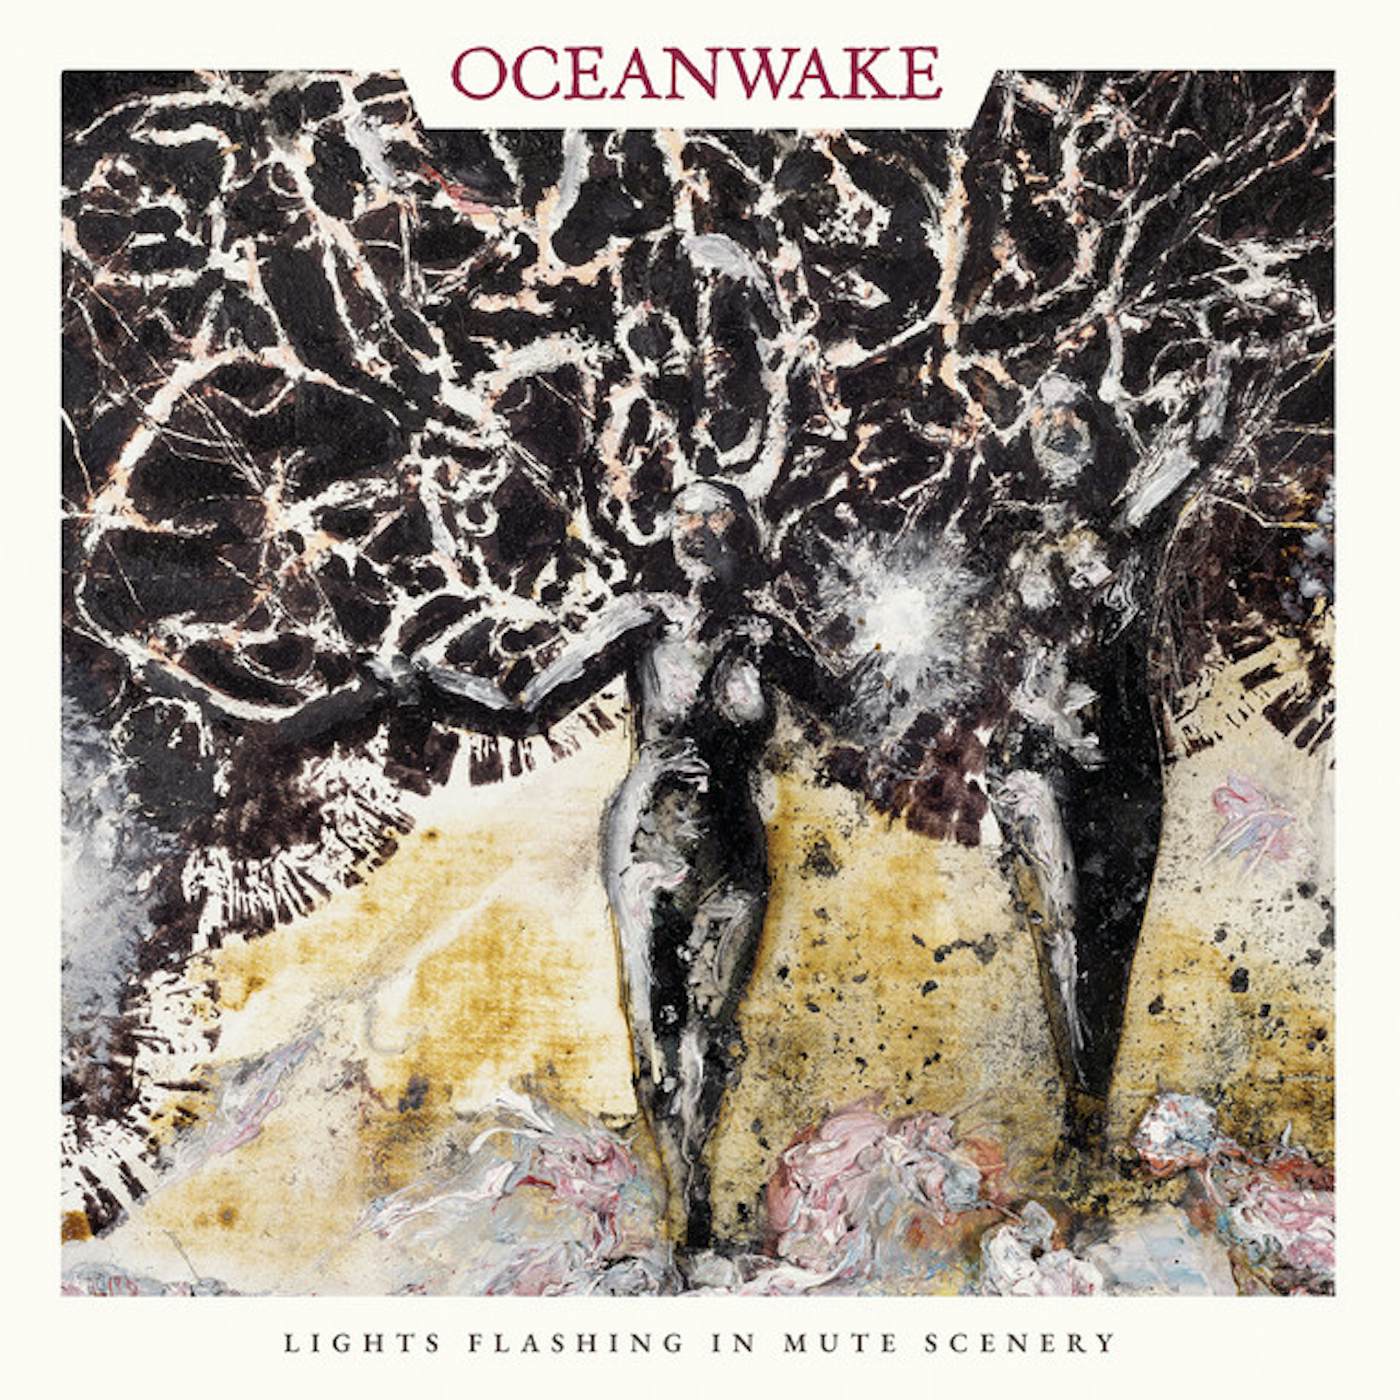 Oceanwake LIGHTS FLASHING IN MUTE SCENERY CD